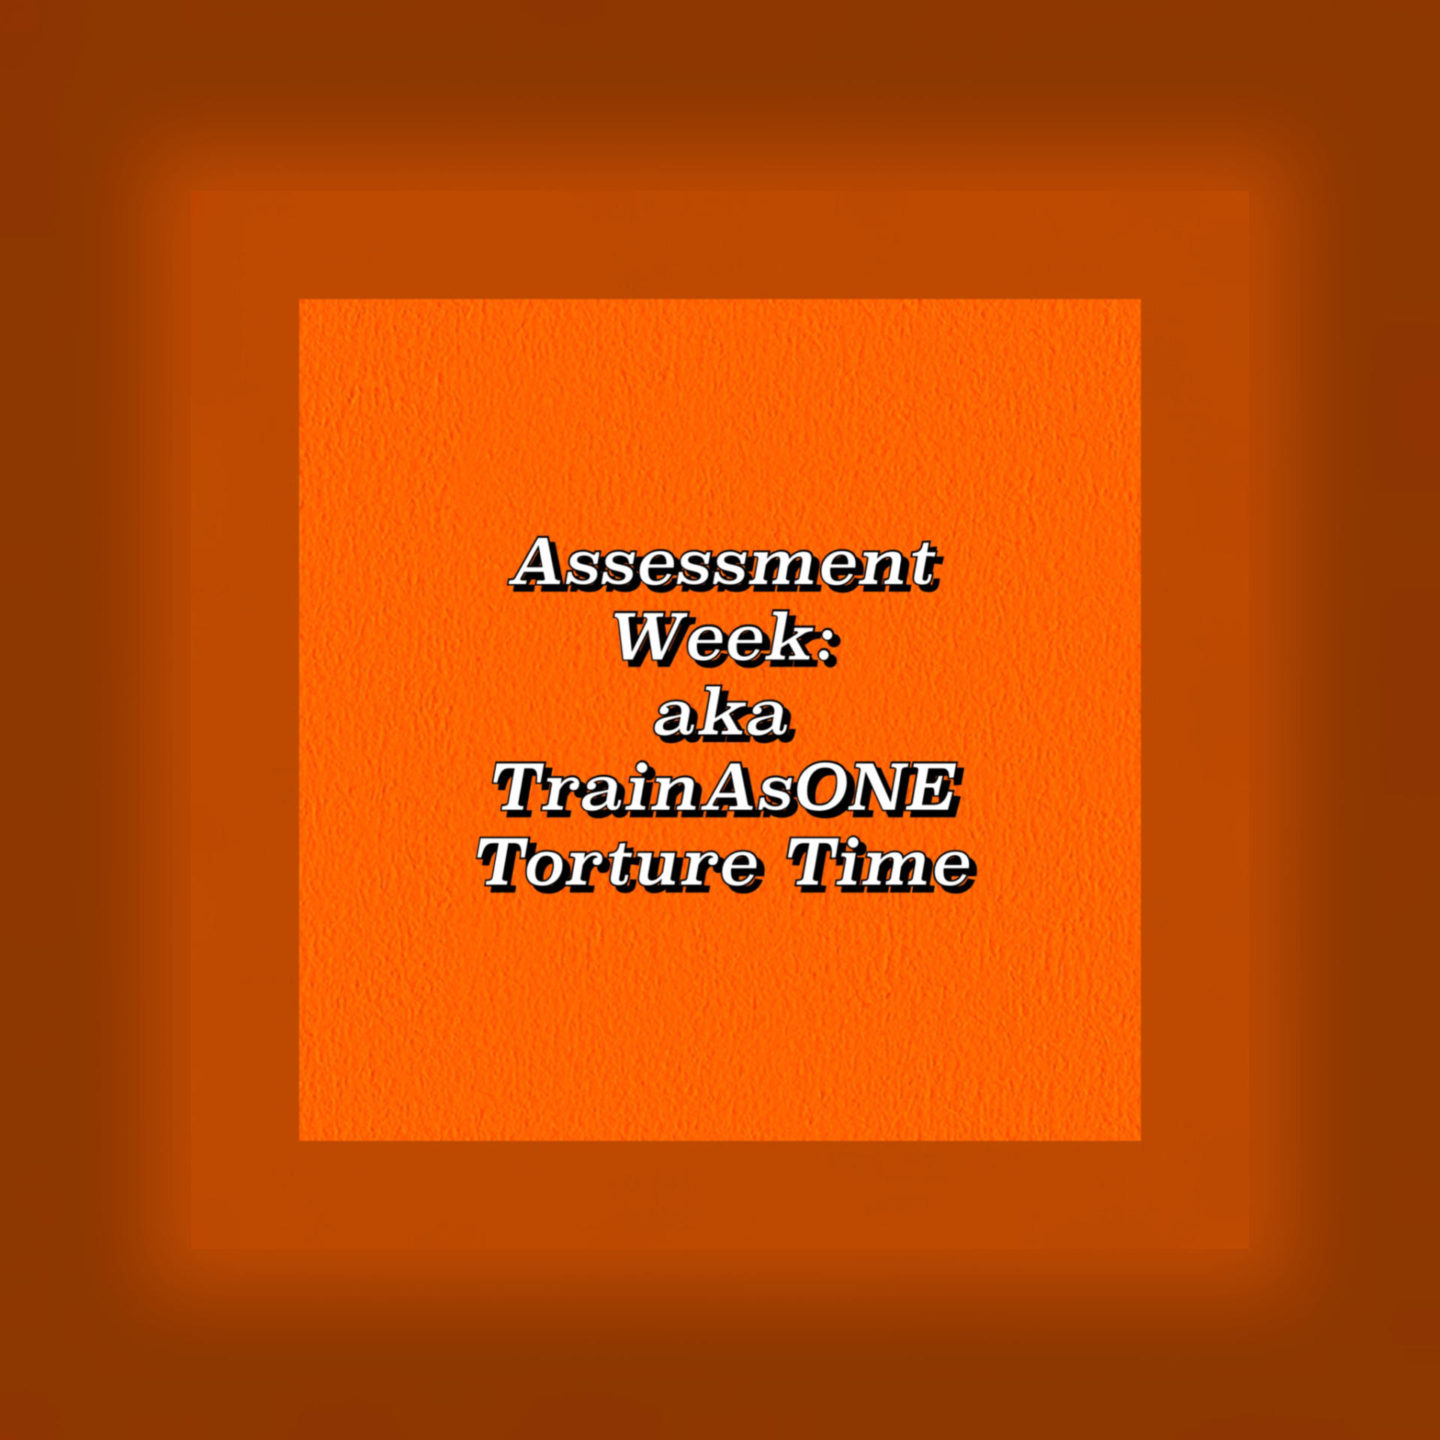 Image wording - Assessment Week: aka TrainAsONE Torture Time